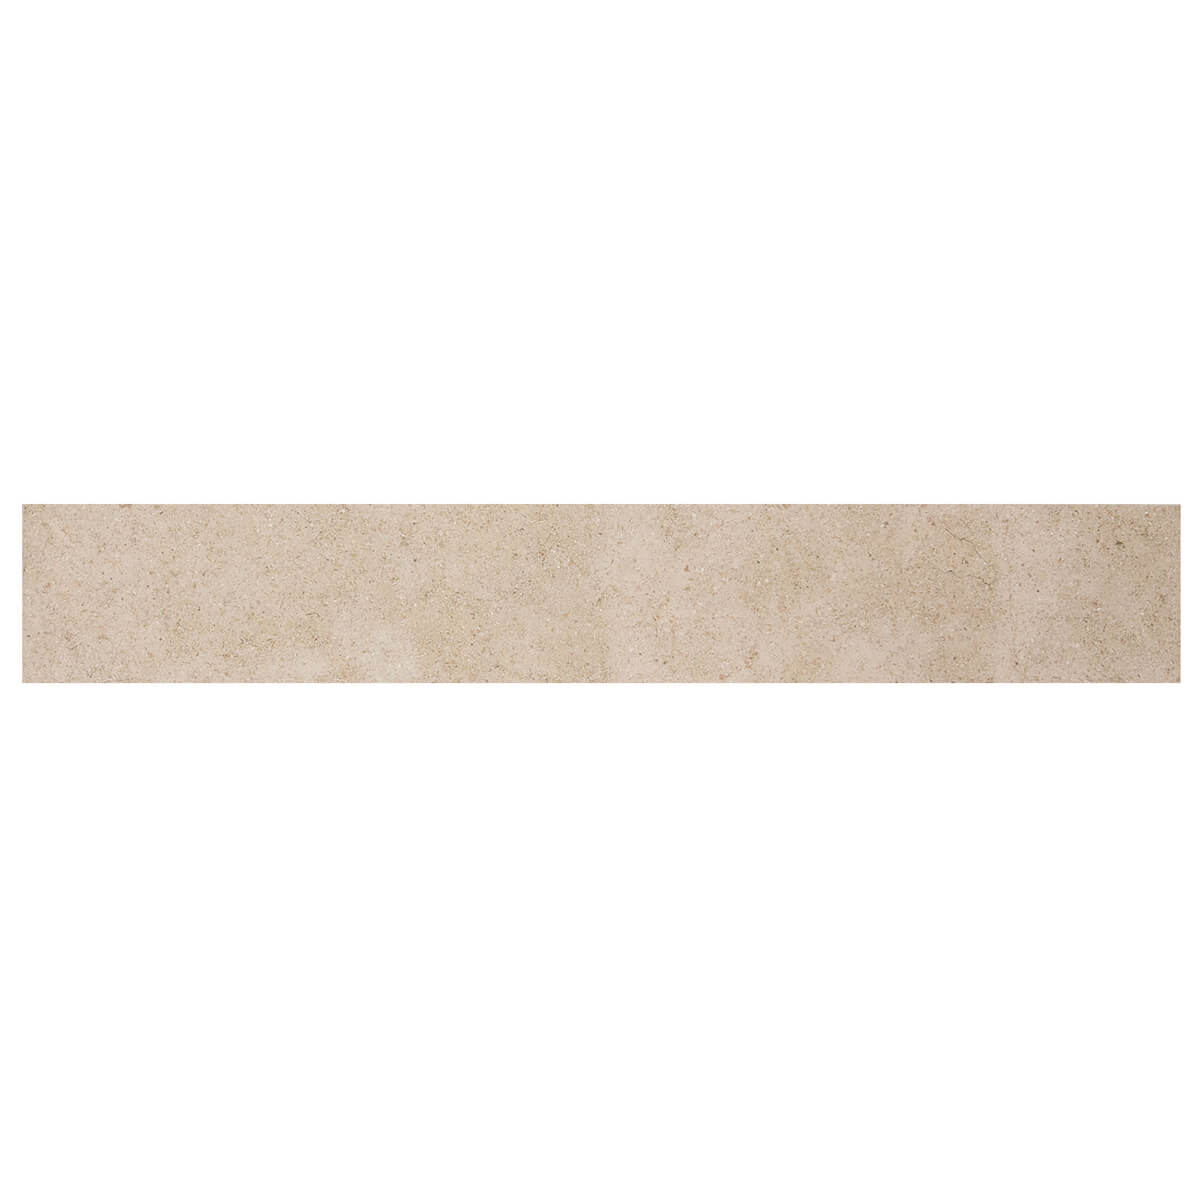 haussmann fonjone gascogne beige limestone rectangle natural stone field tile 4x24 honed